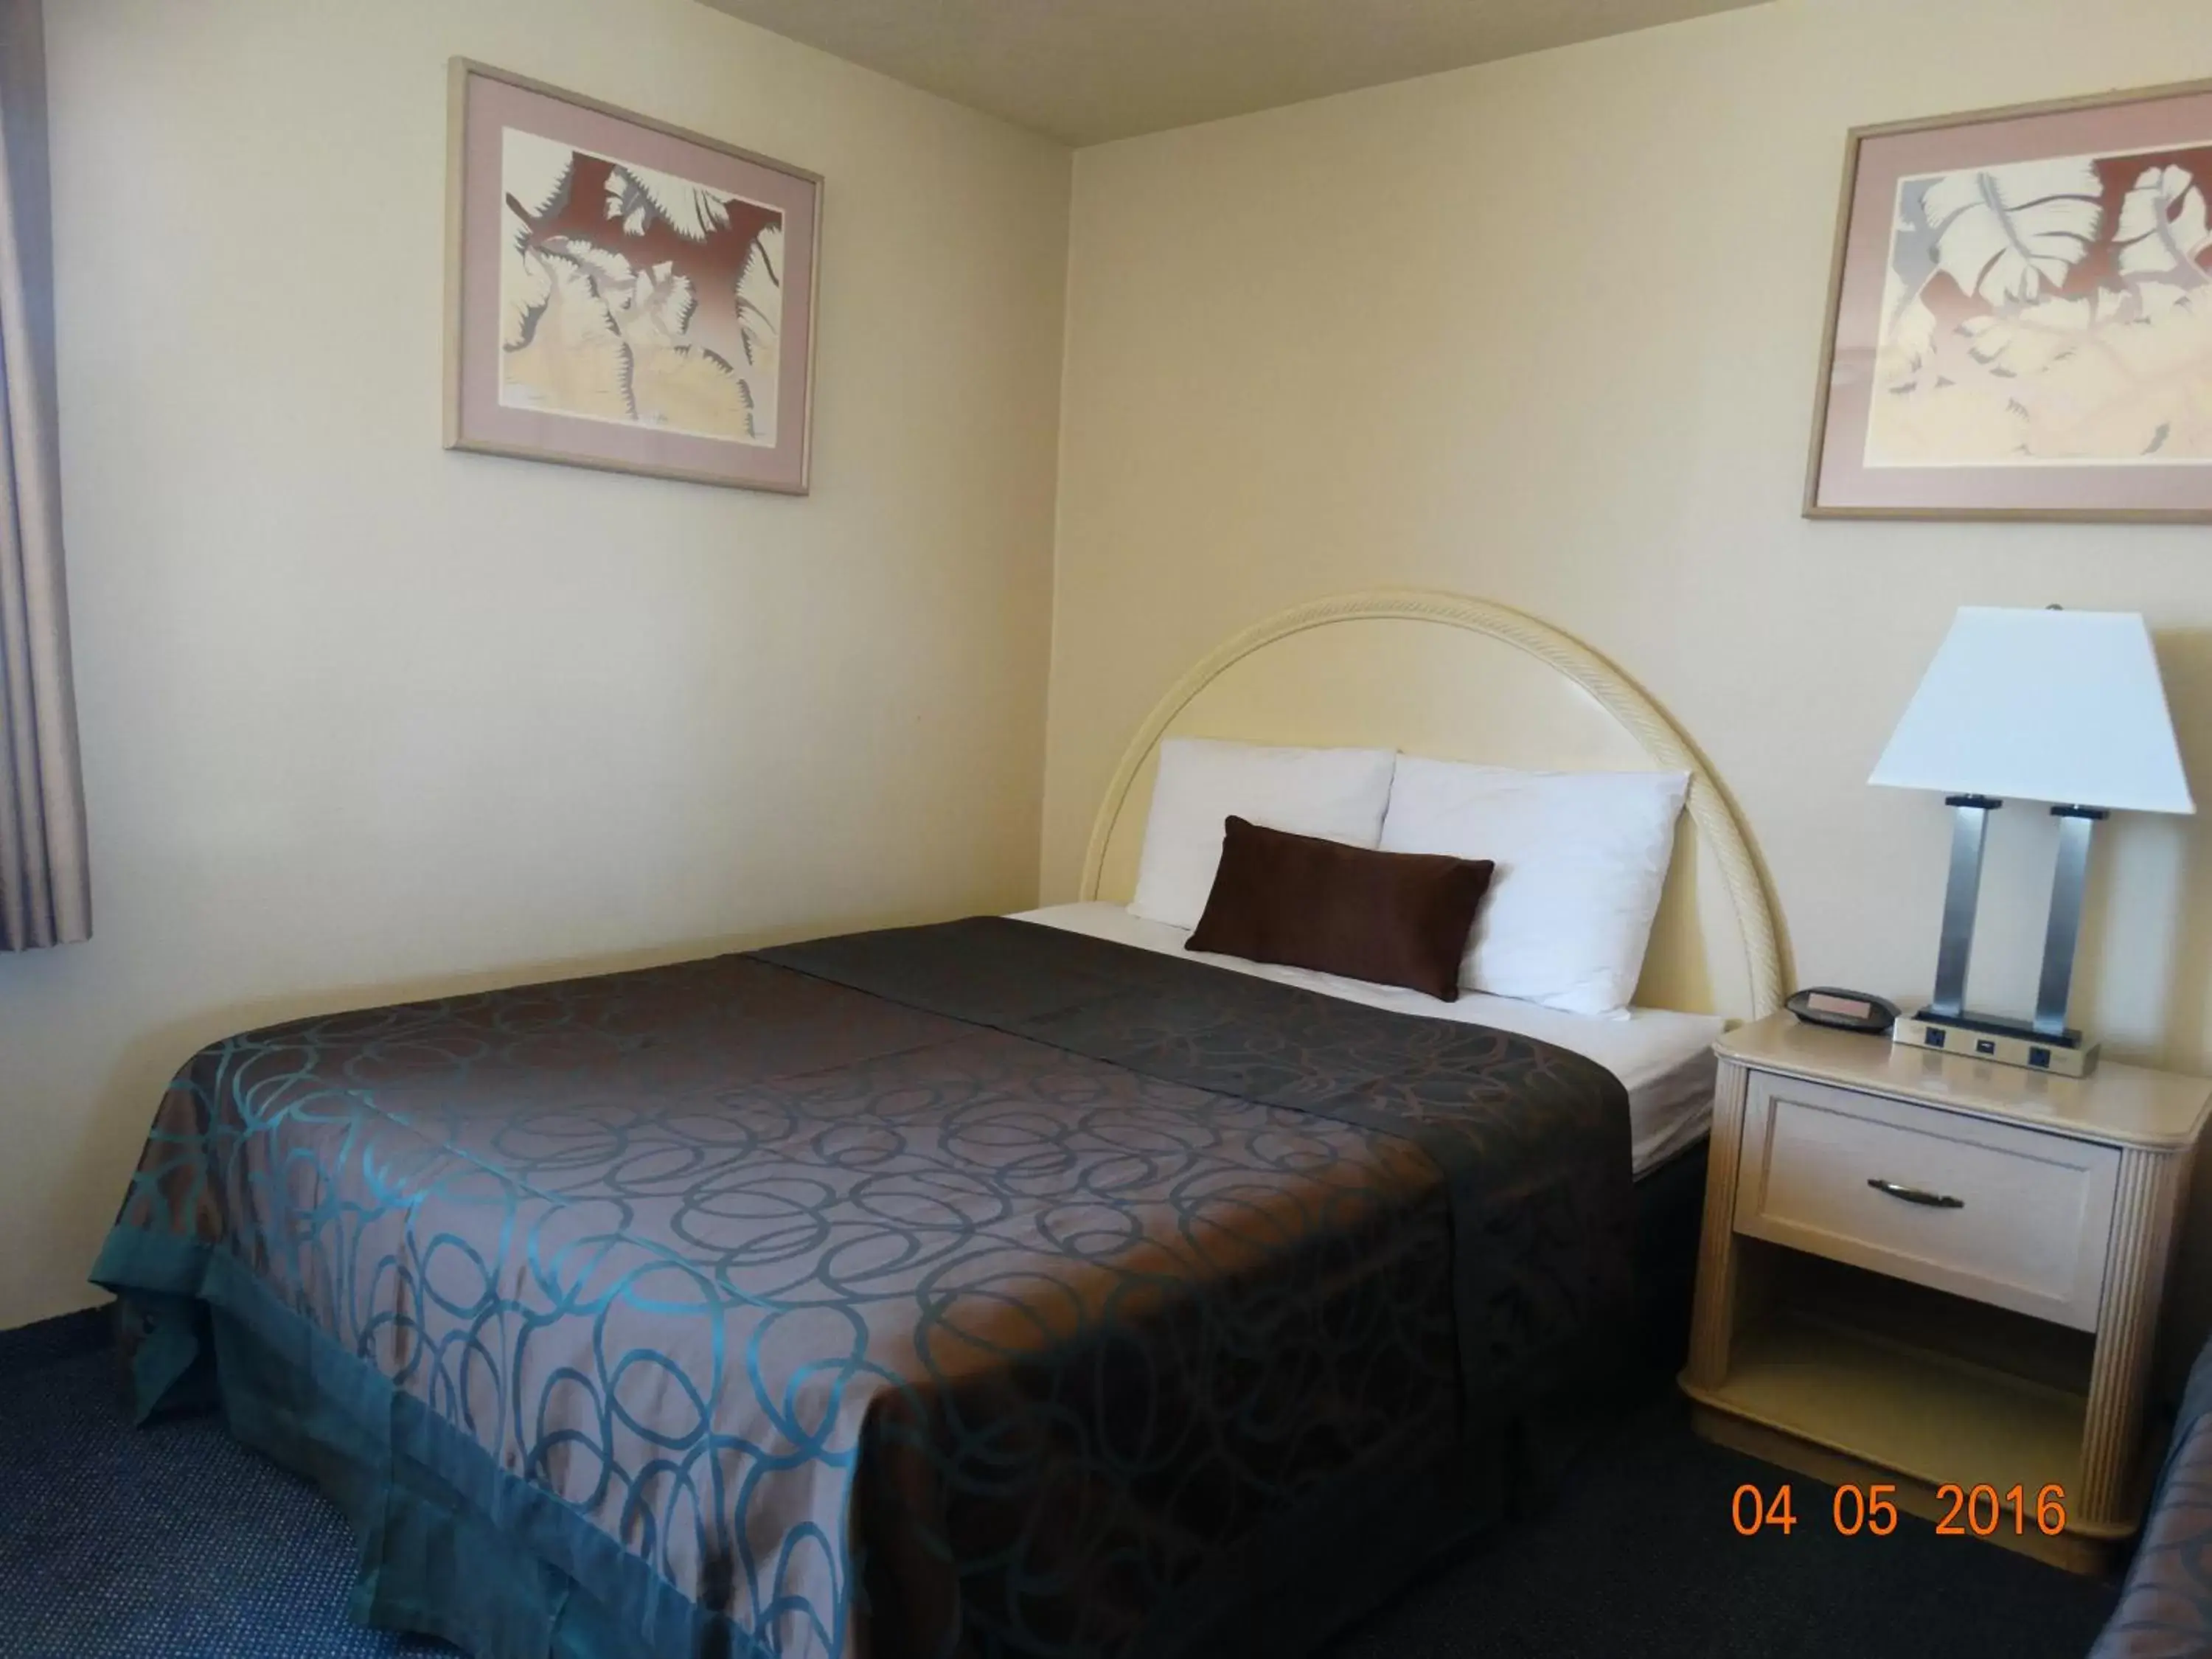 Bedroom, Room Photo in Budget Motel